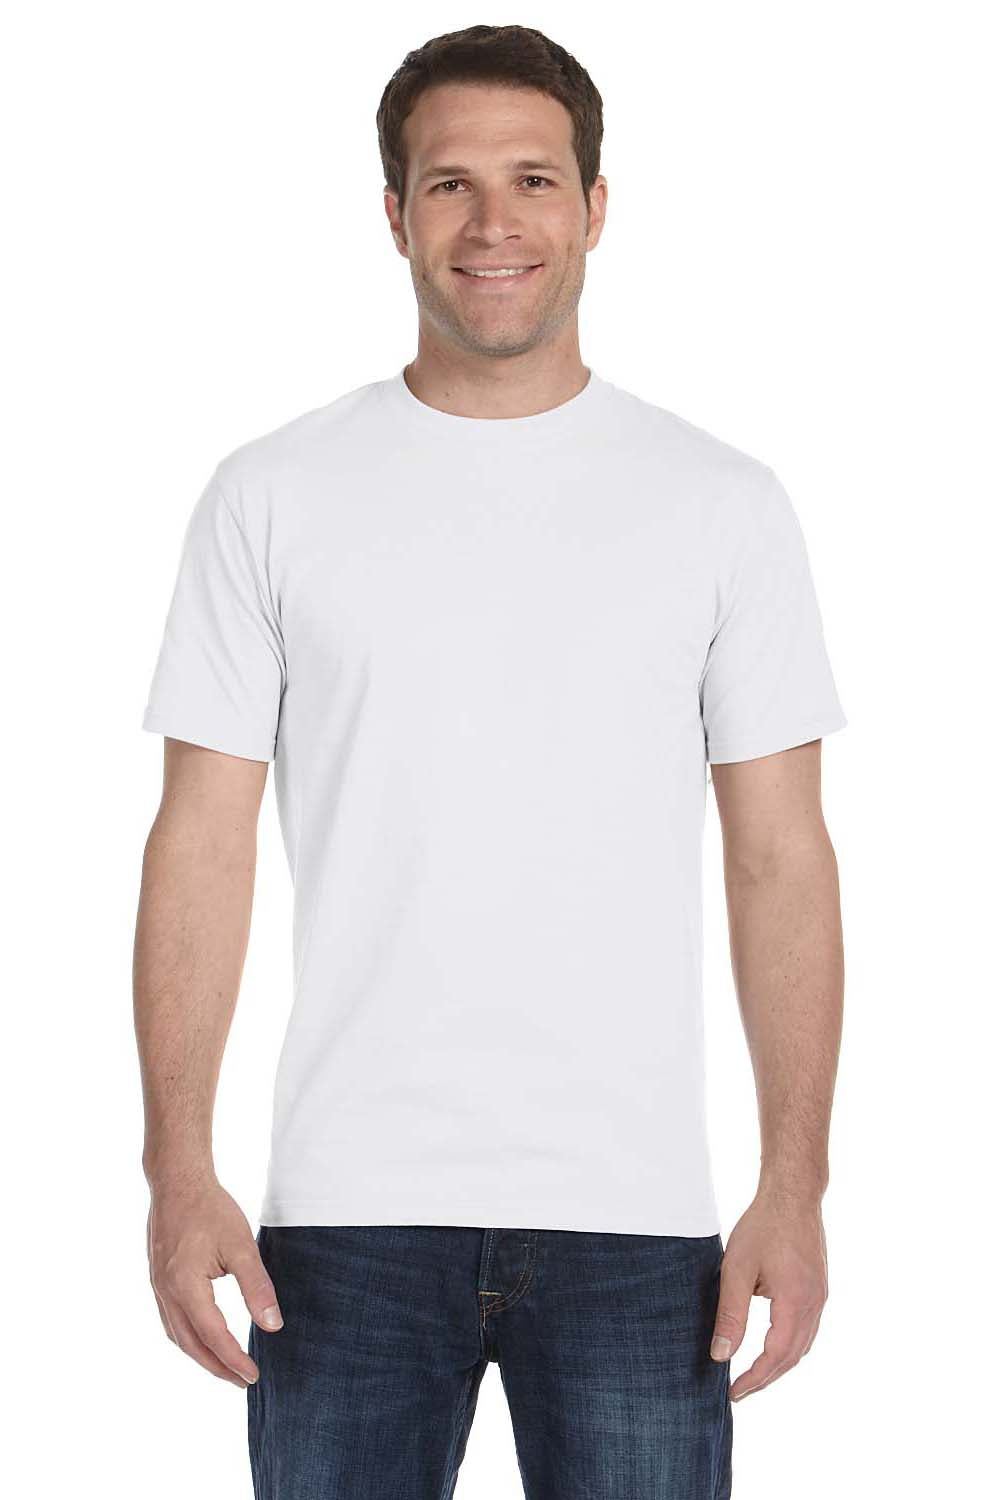 Hanes 5280 Mens ComfortSoft Short Sleeve Crewneck T-Shirt White Front